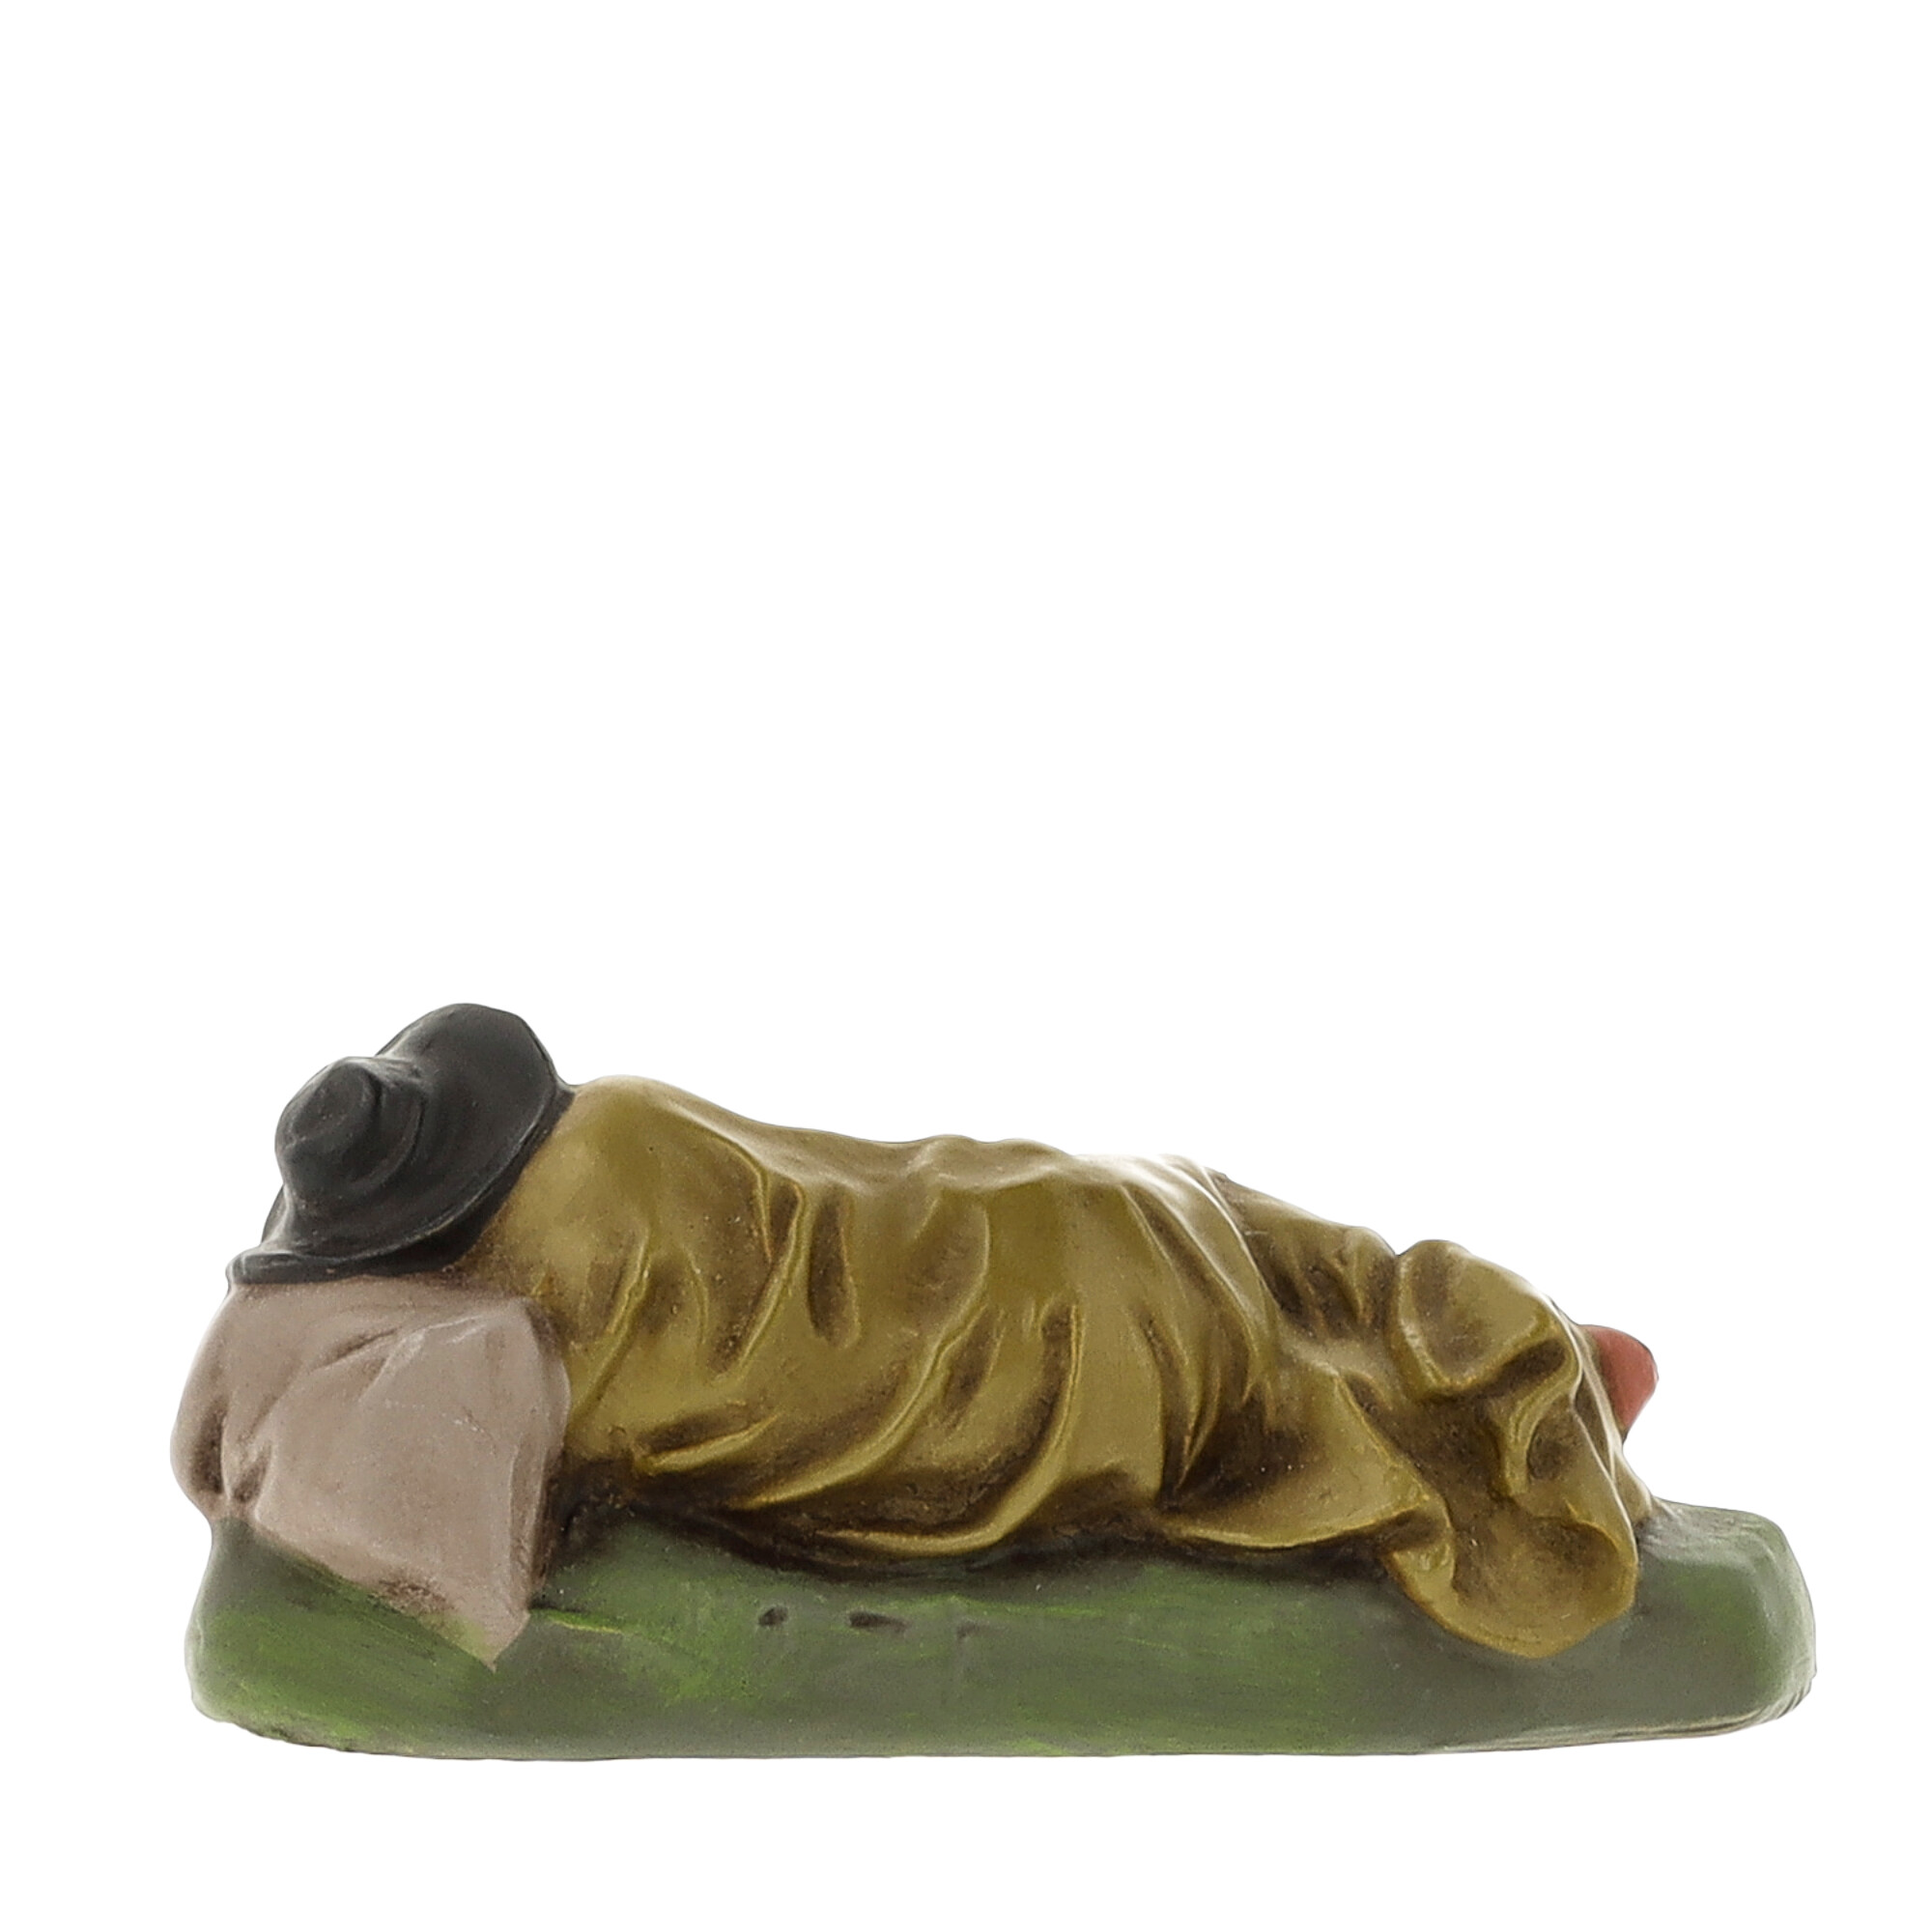 Sleeping shepherd with blanket - MAROLIN Nativity figure